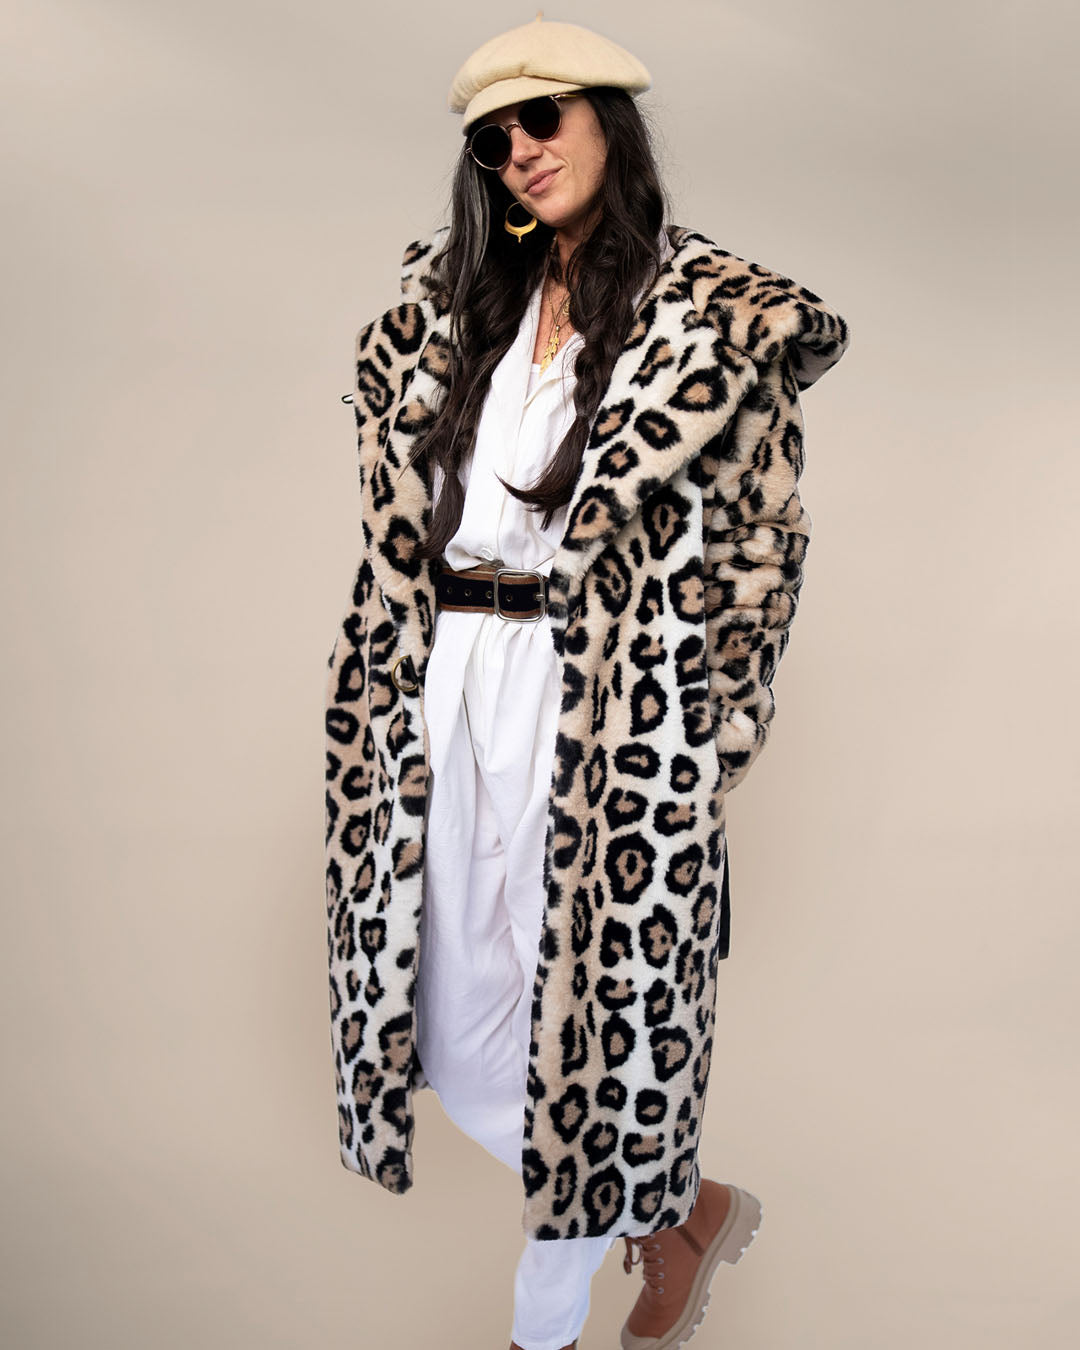 Arabian Leopard Classic Collector Edition Faux Fur Wrap Calf Length Coat | Women's